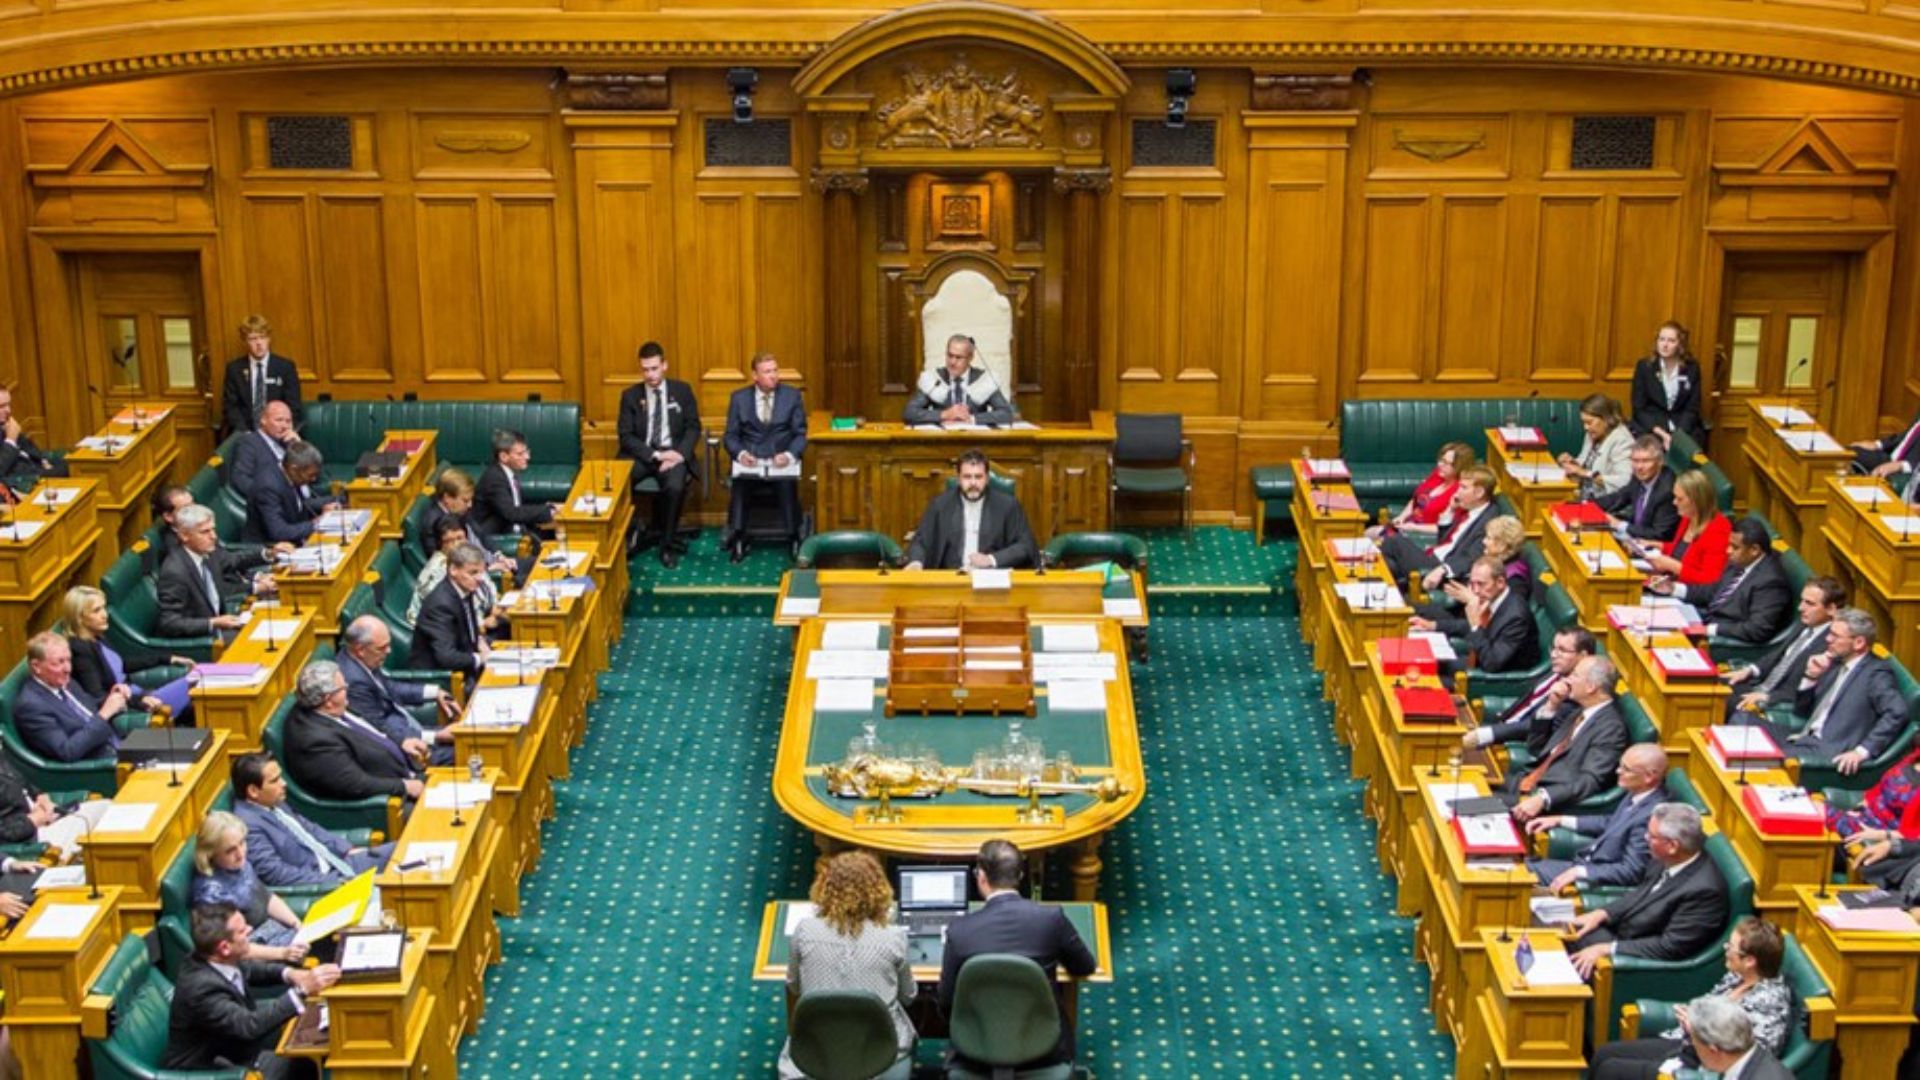 Parliament Members: Key Traits of Parliamentarians